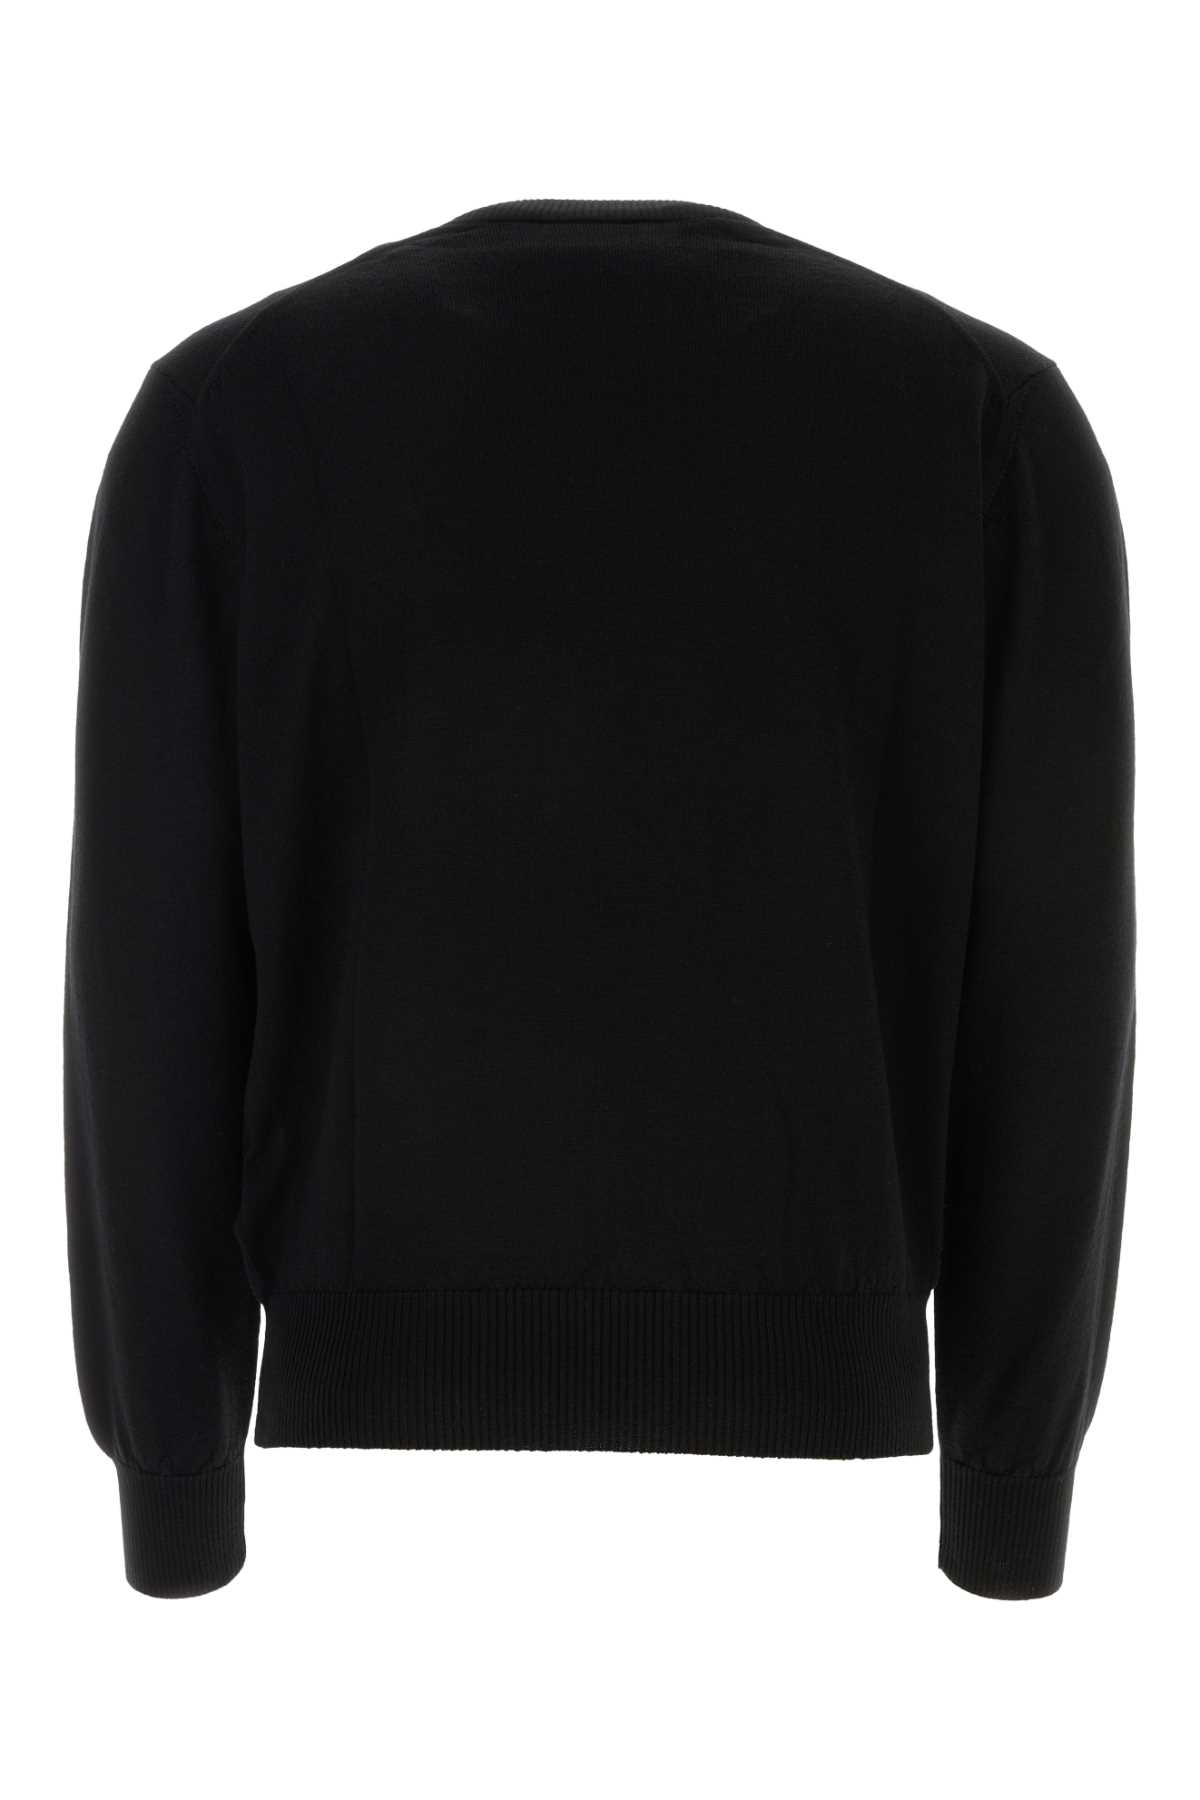 Shop Ami Alexandre Mattiussi Black Wool Sweater